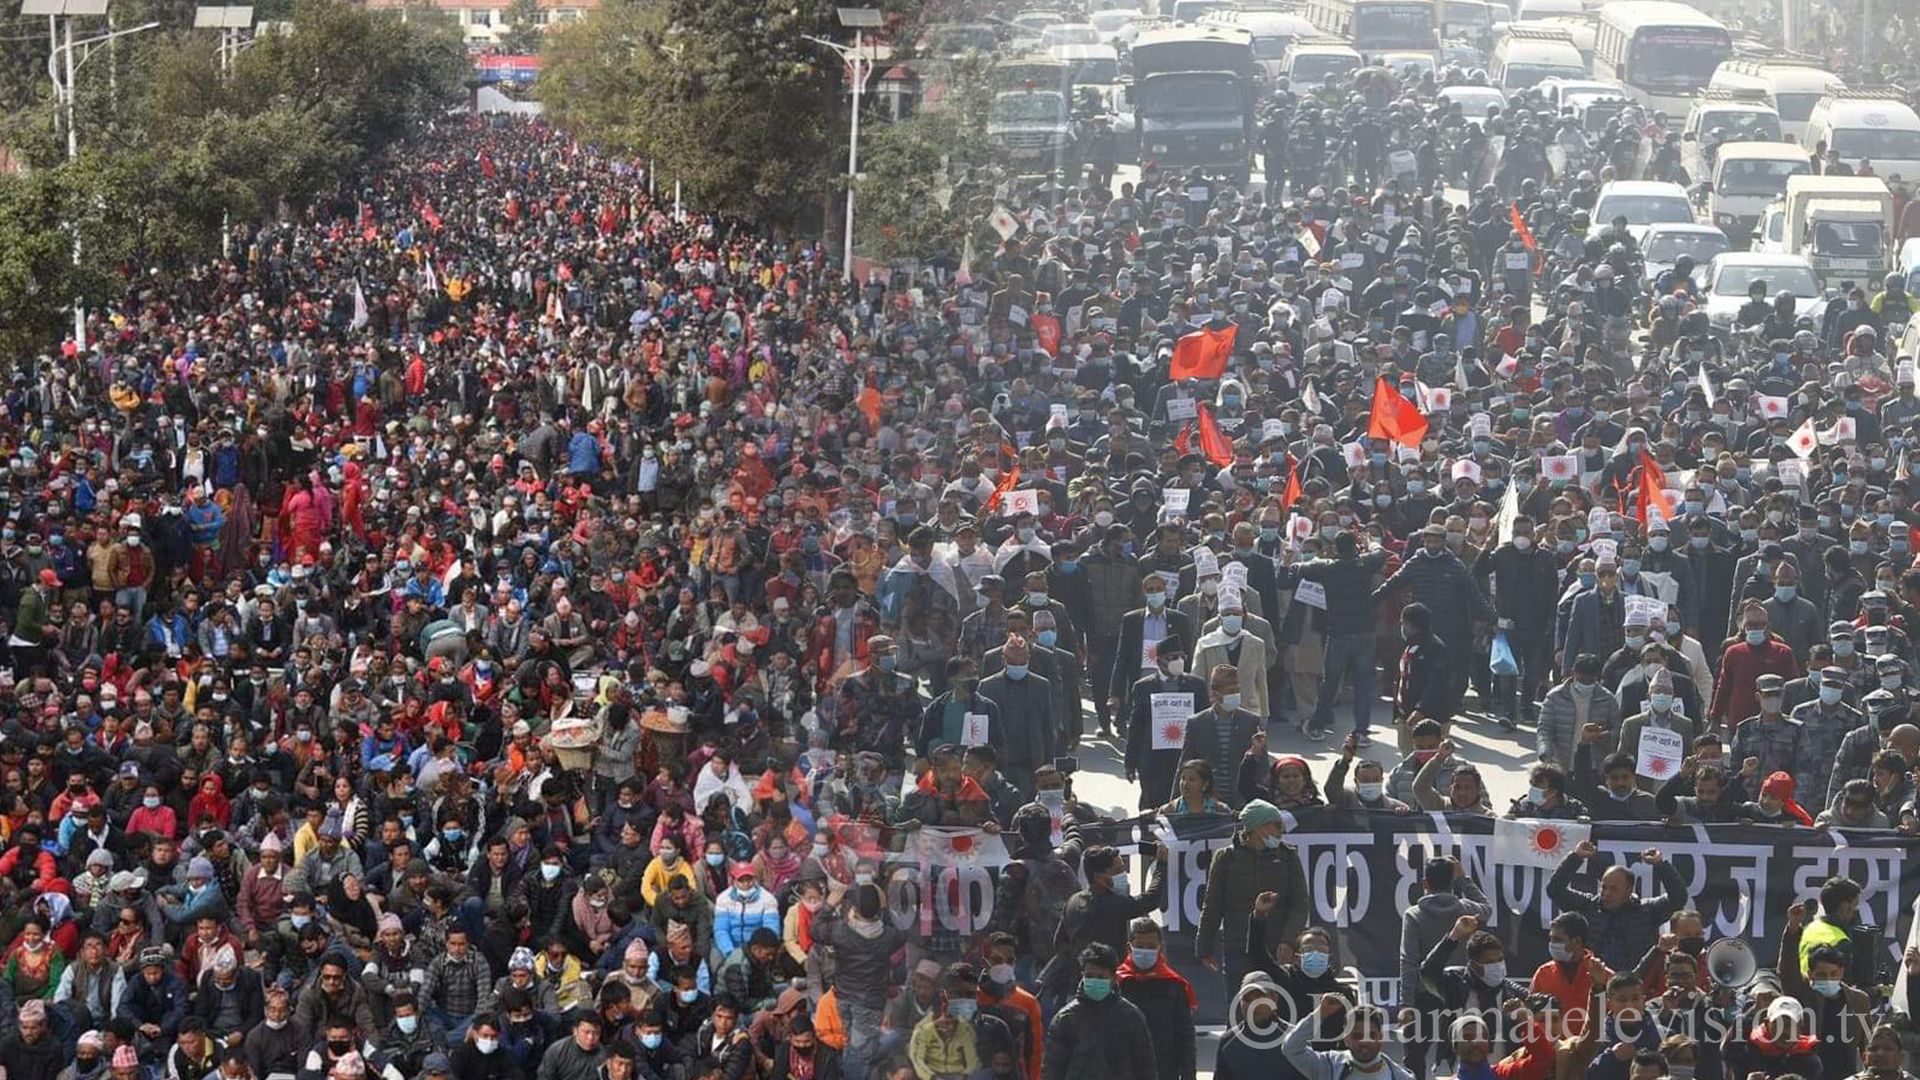 Dahal-Nepal group demonstrating in Kathmandu today